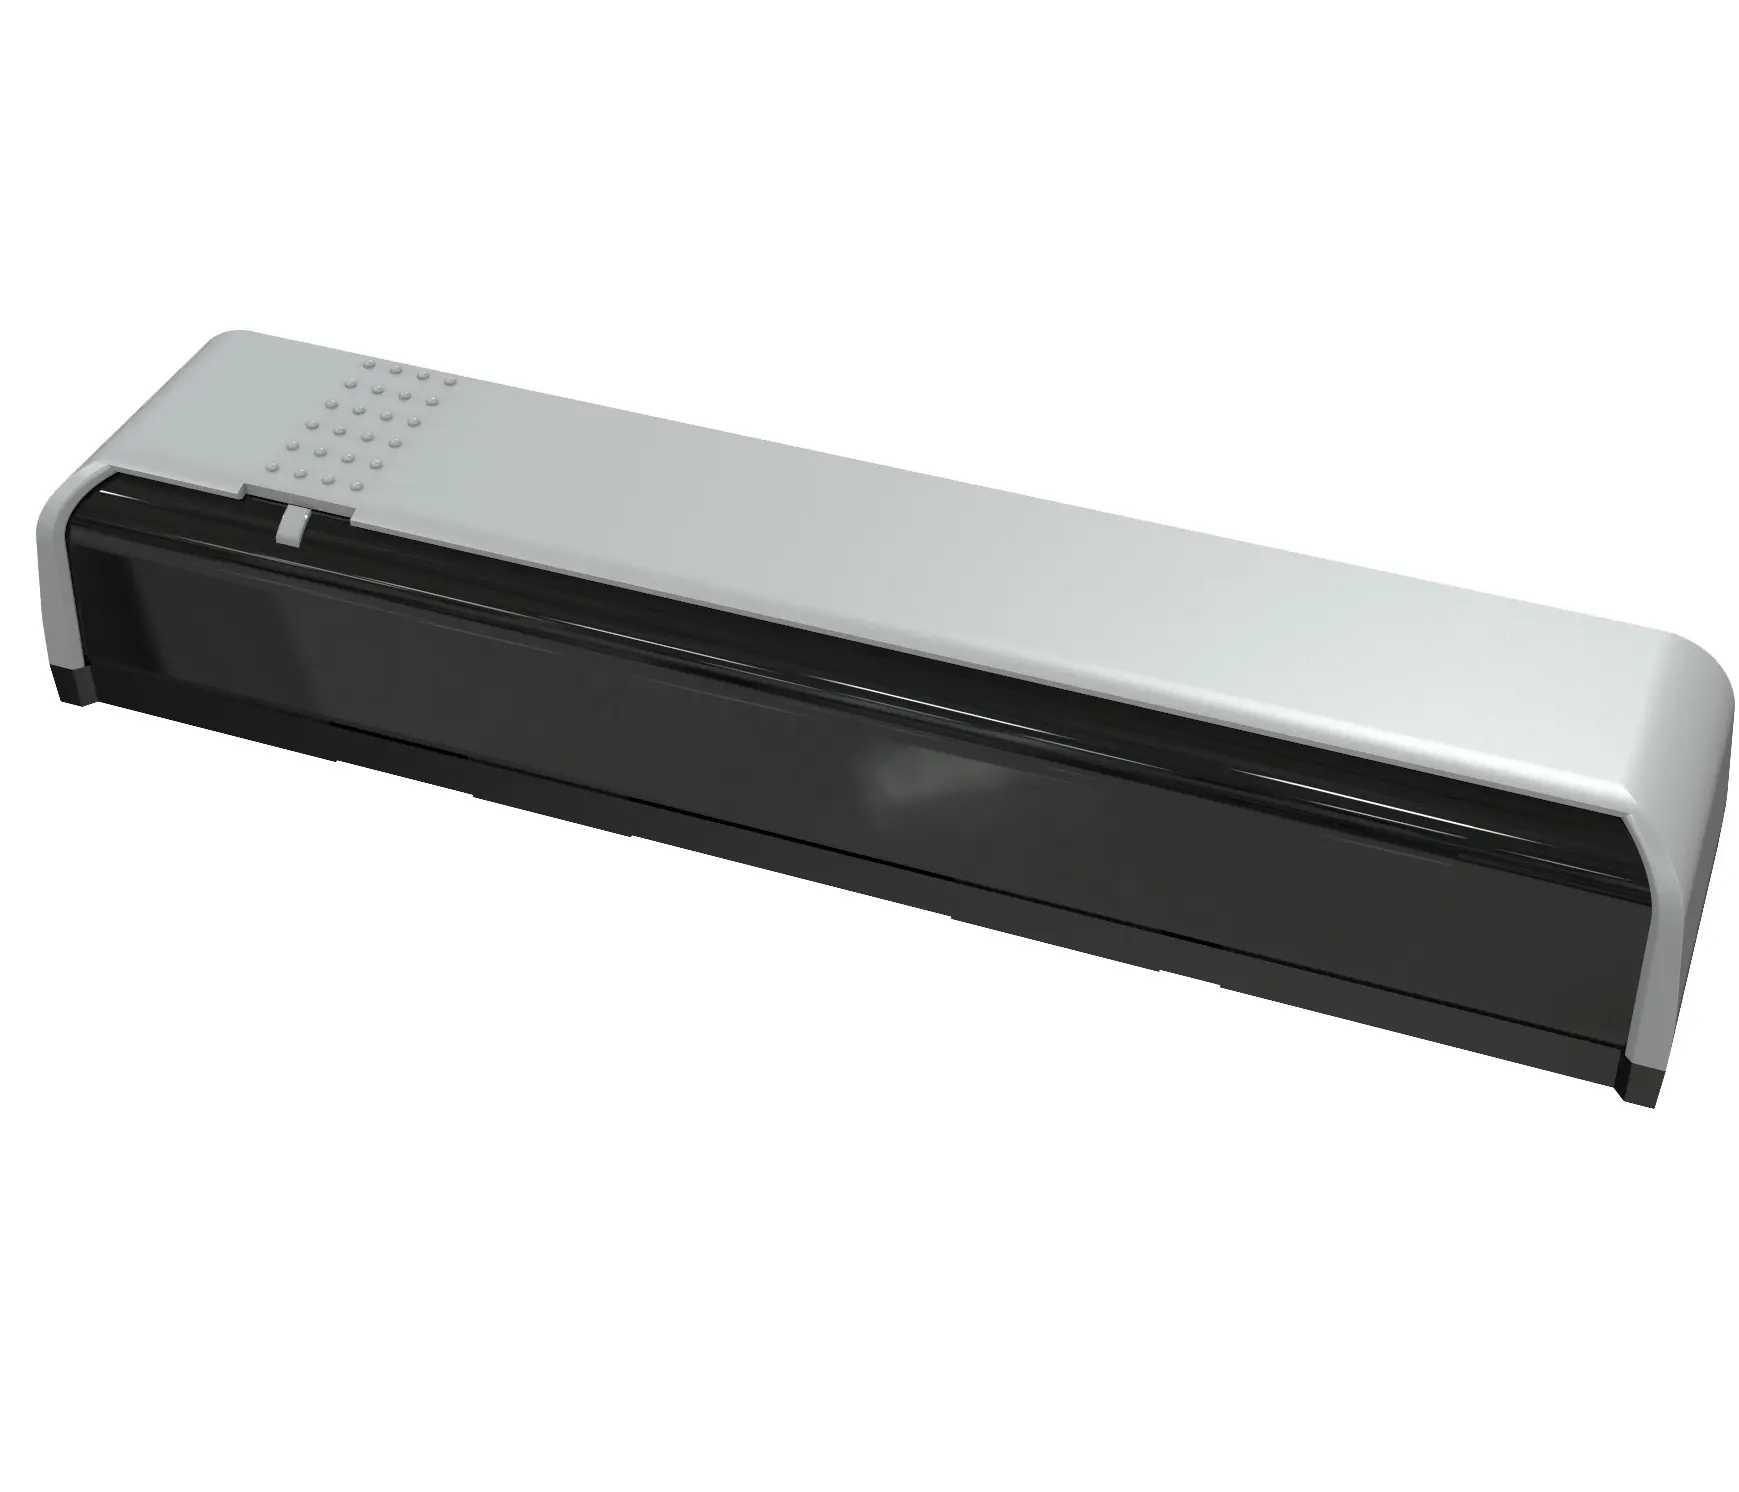 Sensor de movimiento infrarrojo automático para puerta, CNB-507E 2 en 1, estándar europeo, EN16005